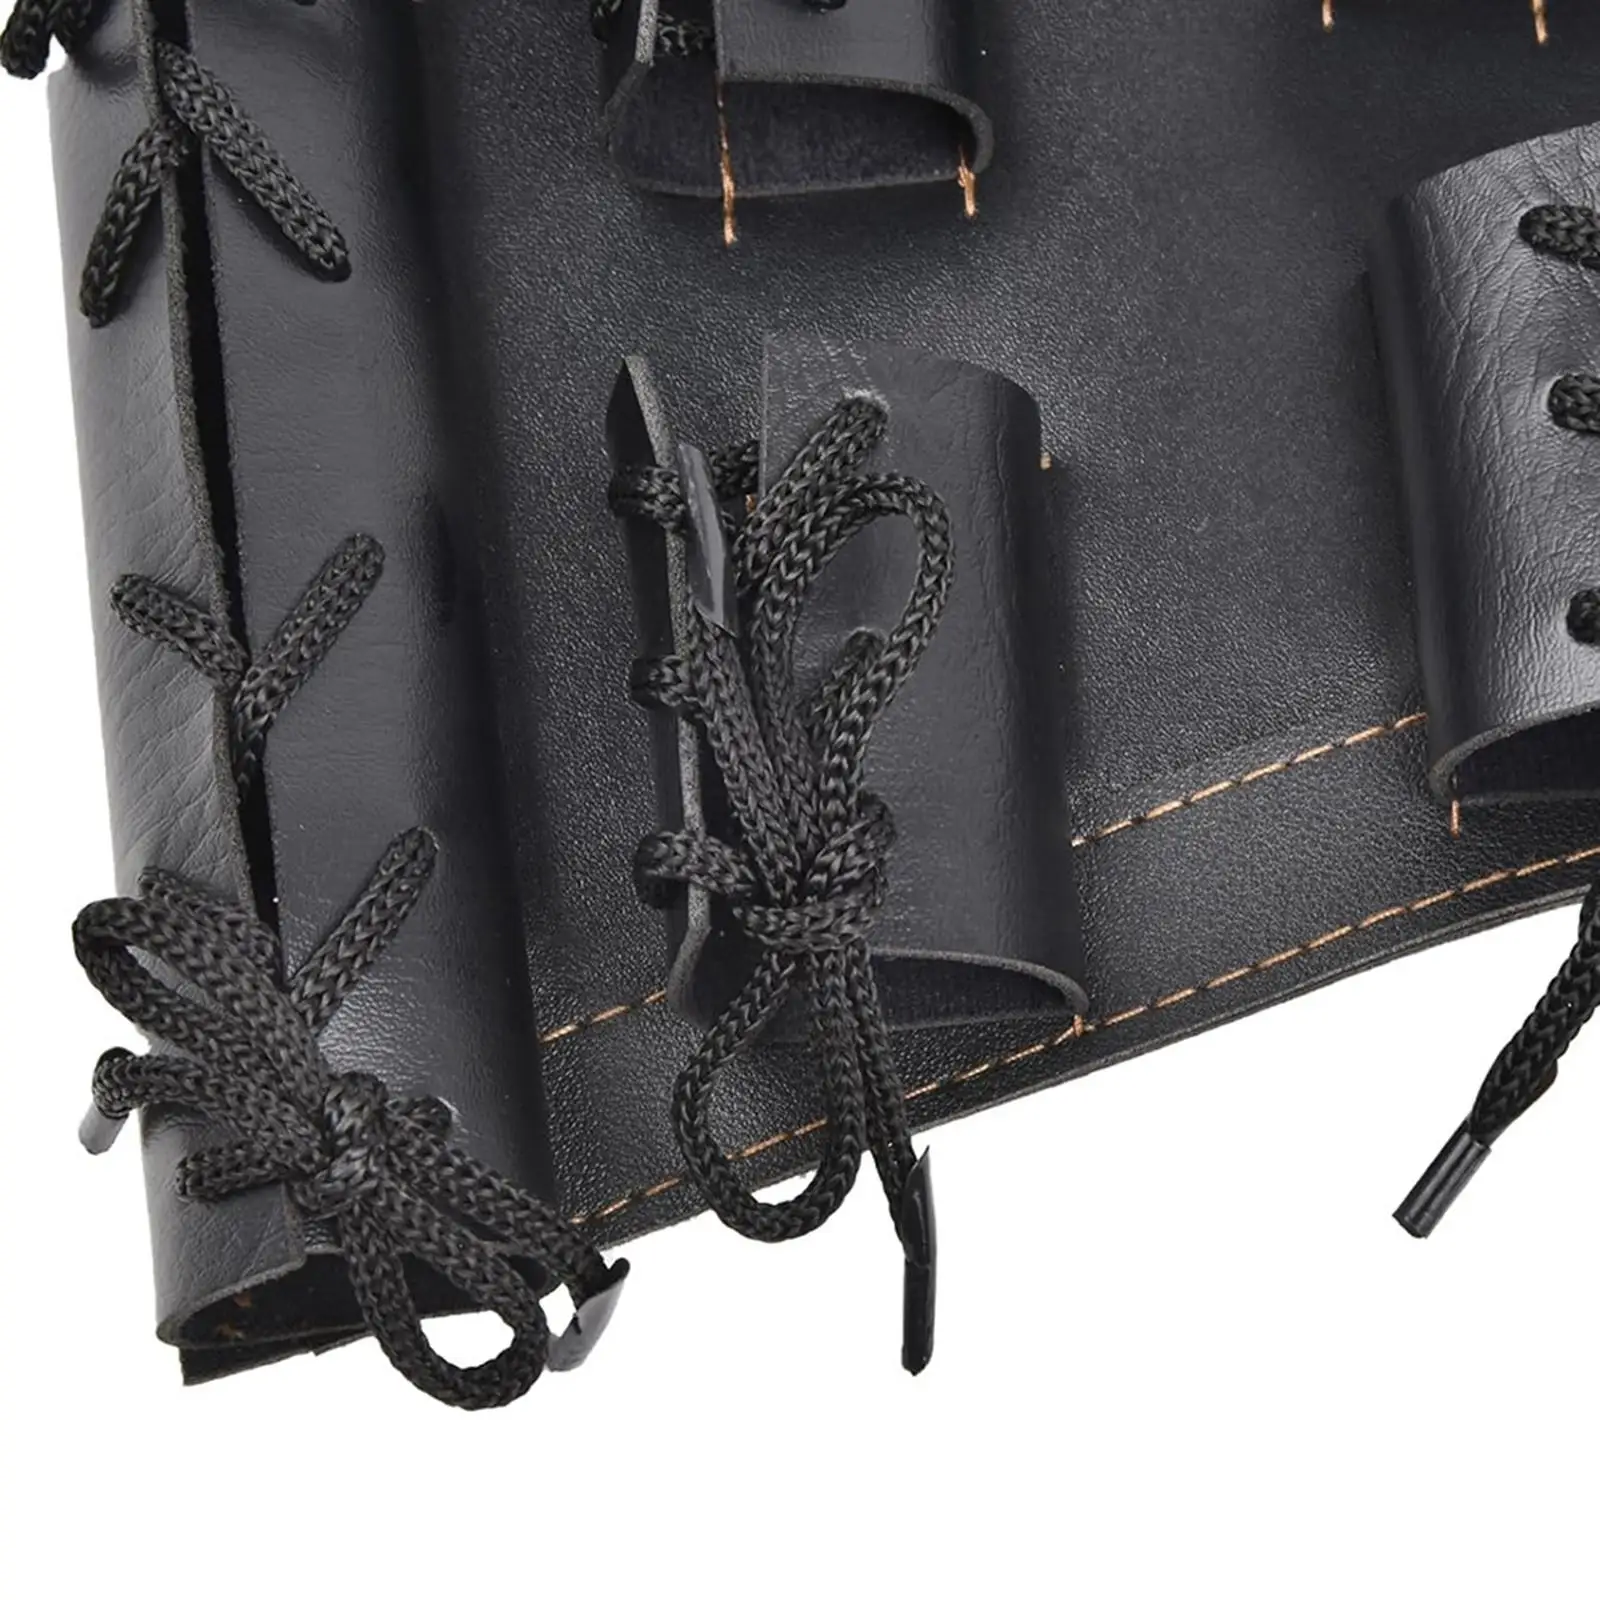 PU Leather Sword Bag Sword Carry Case Adjustable Men Costume Accessory Swords Organizing Bag Carry Bag for Cosplay Decor